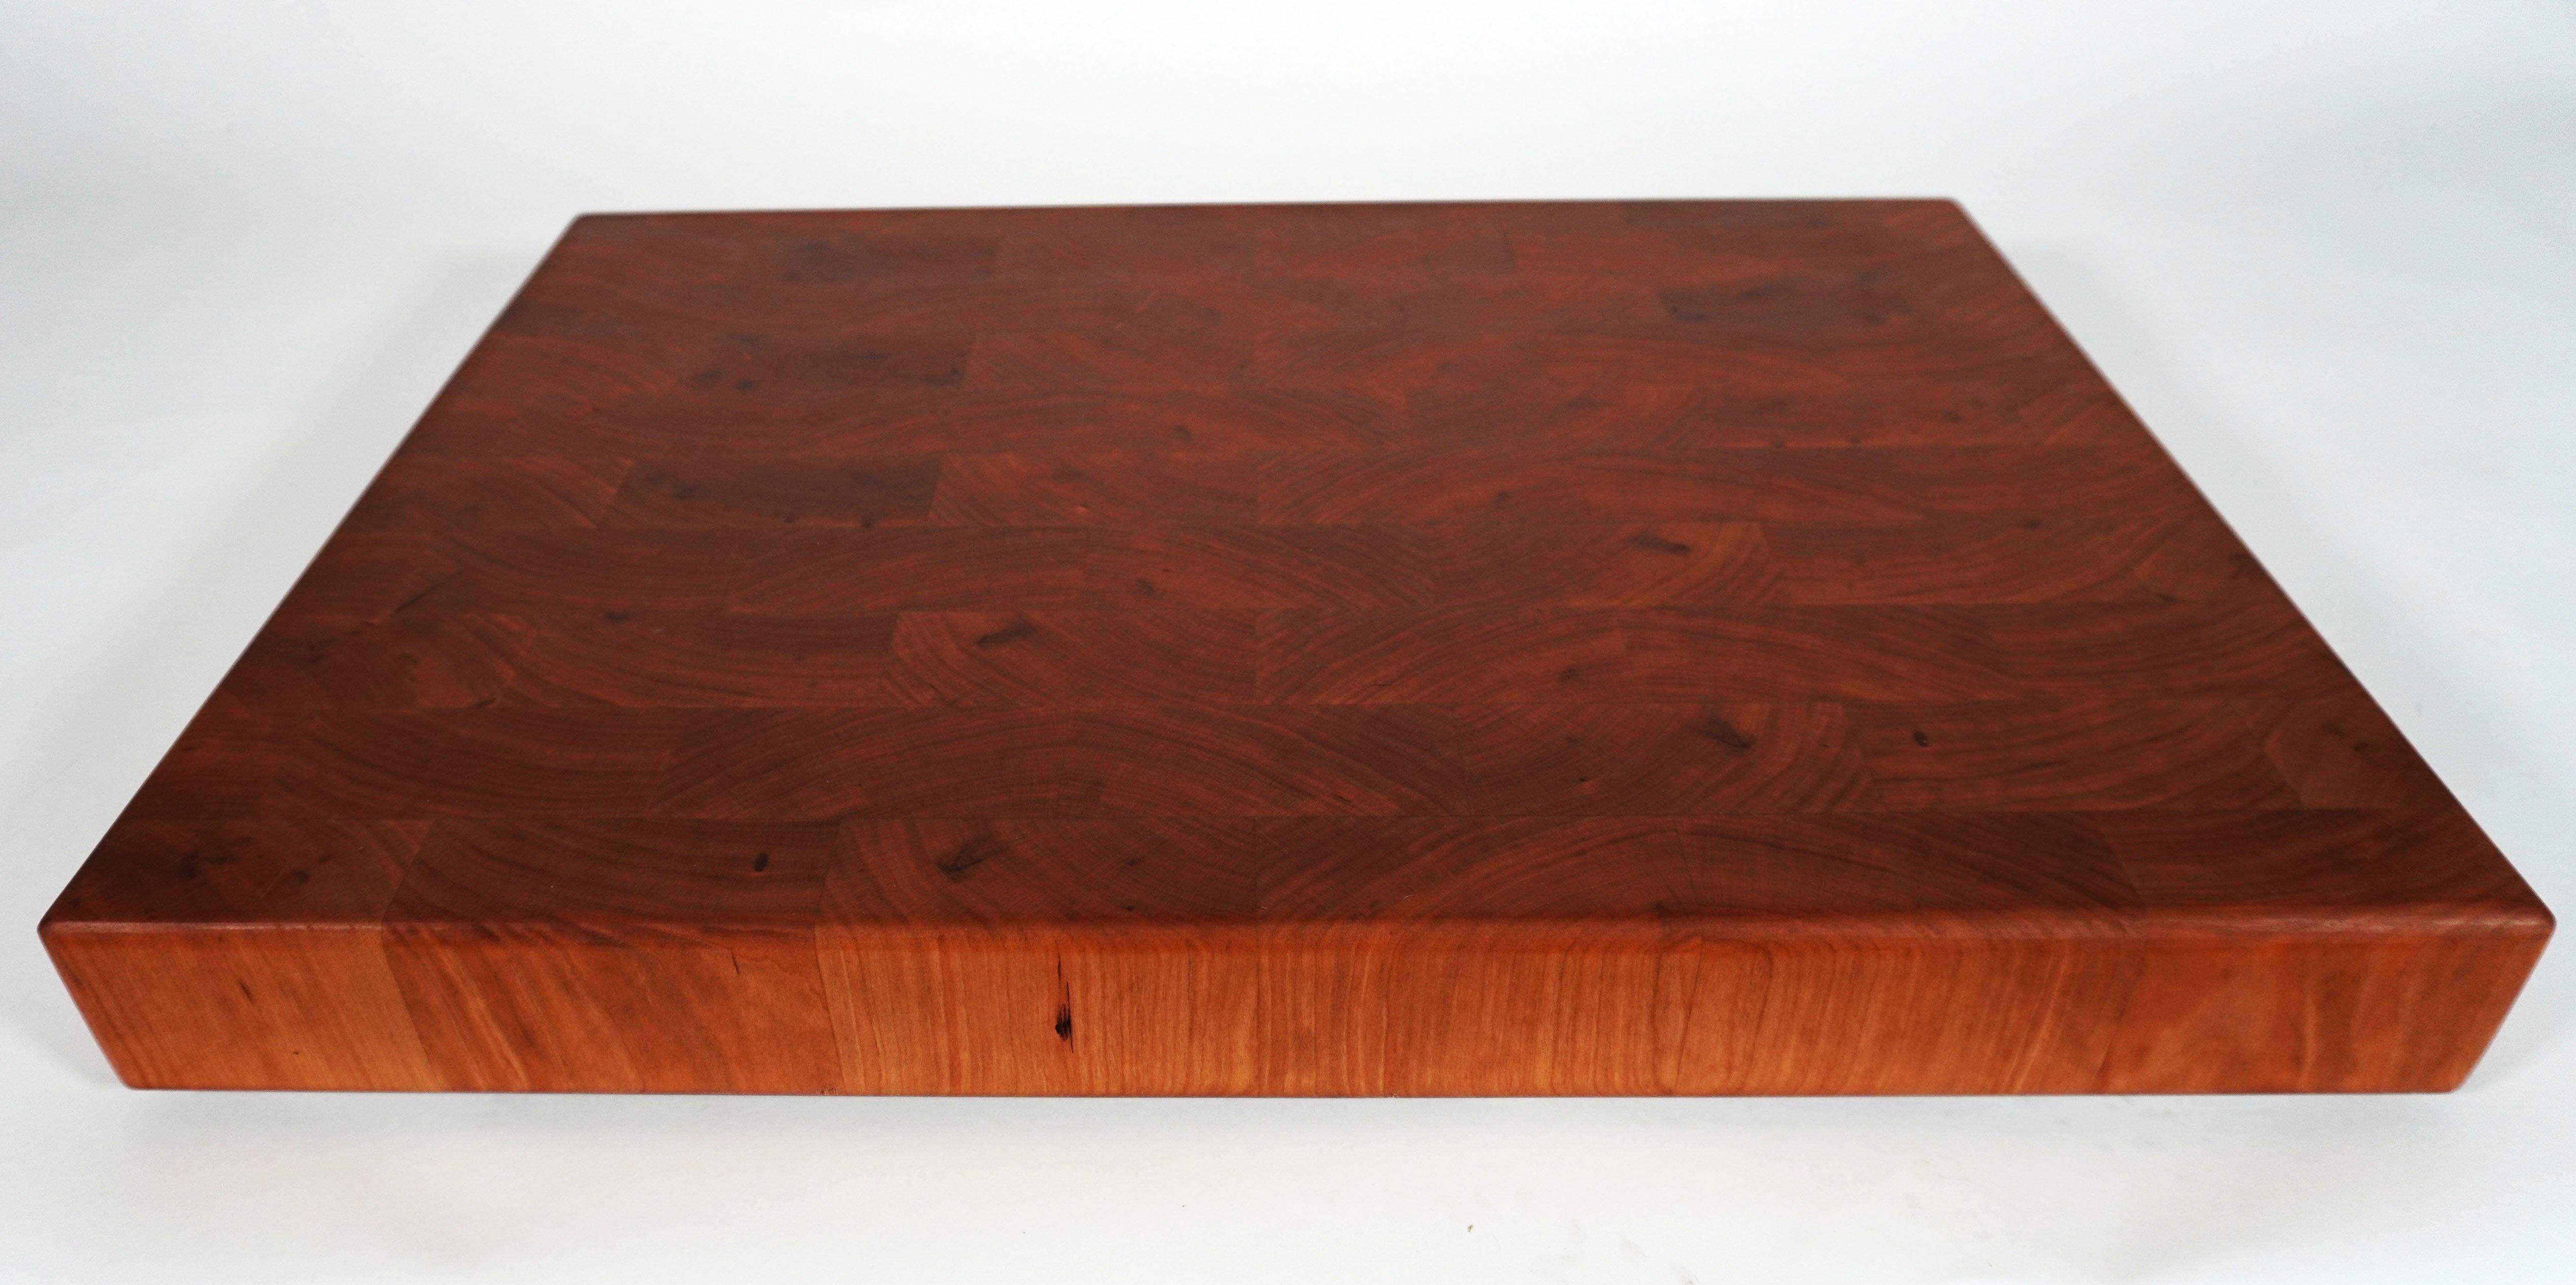 Signature Series Butcher Block Boards - Steelmade